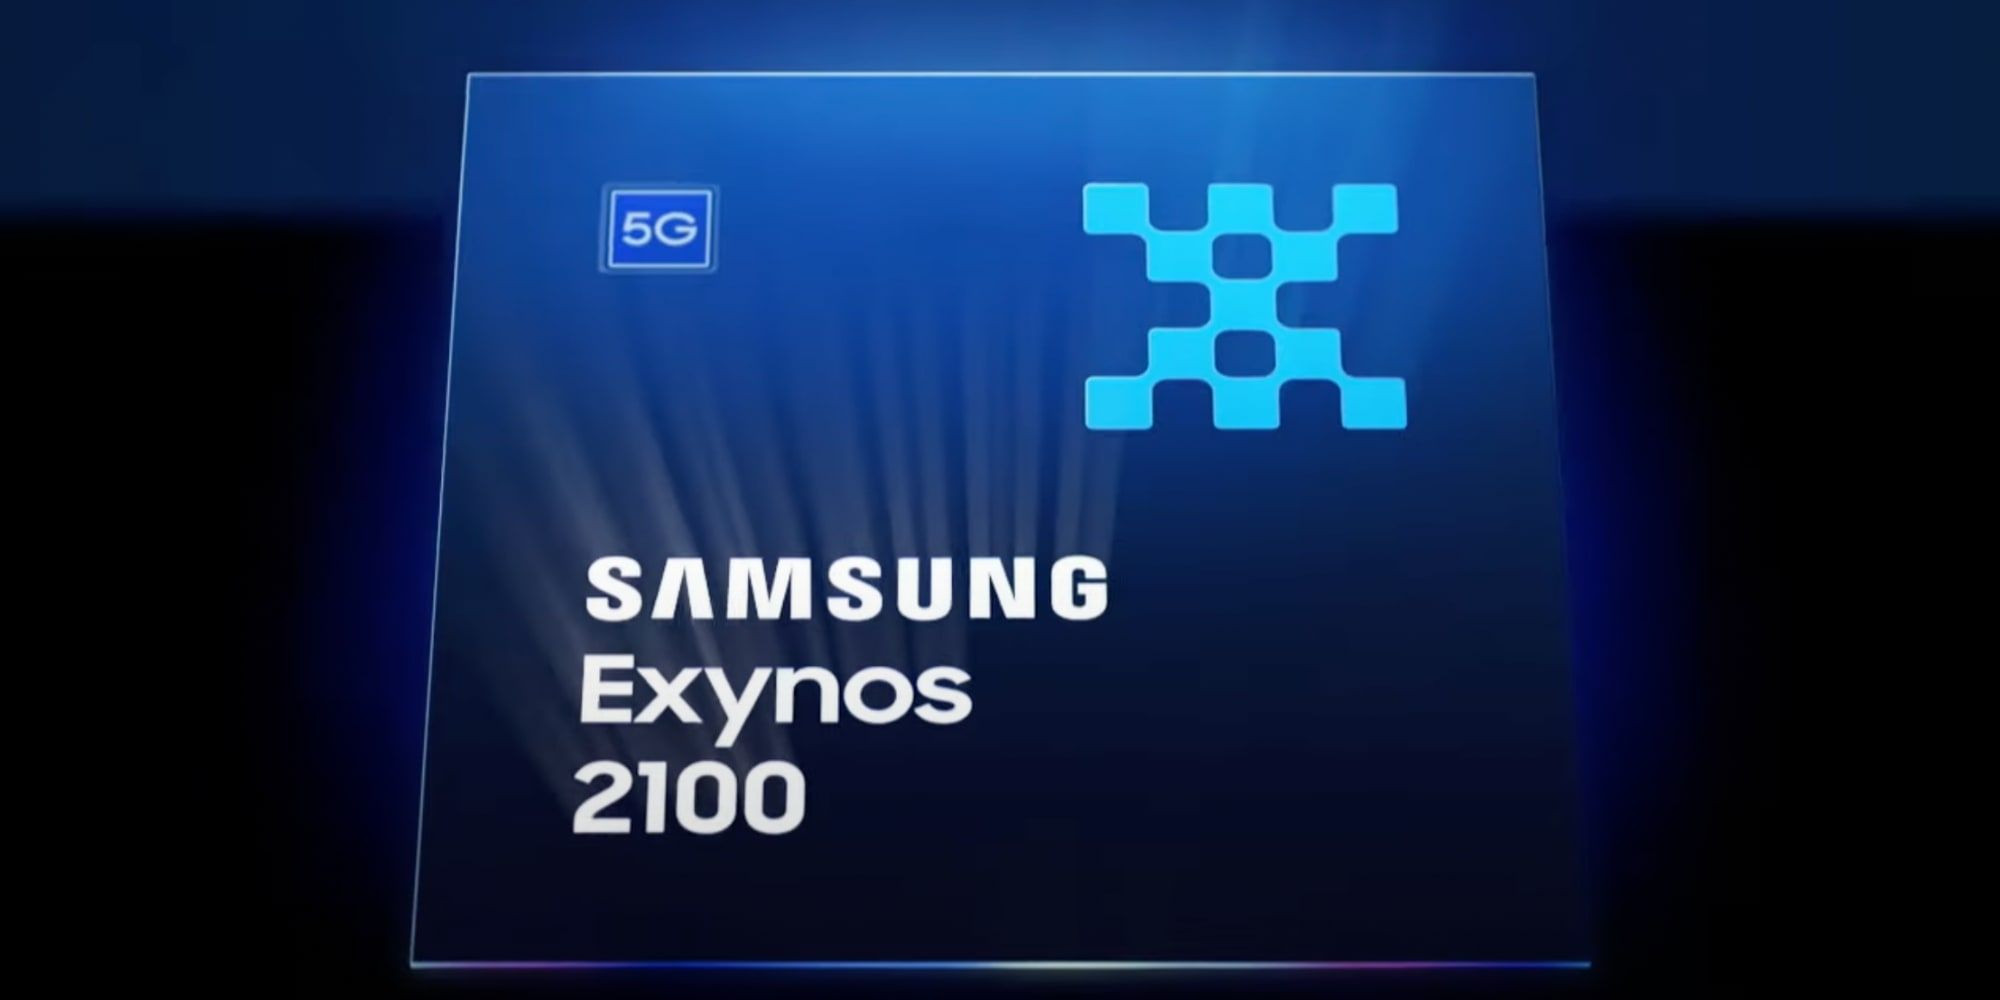 Samsung Exynos 2100 chip